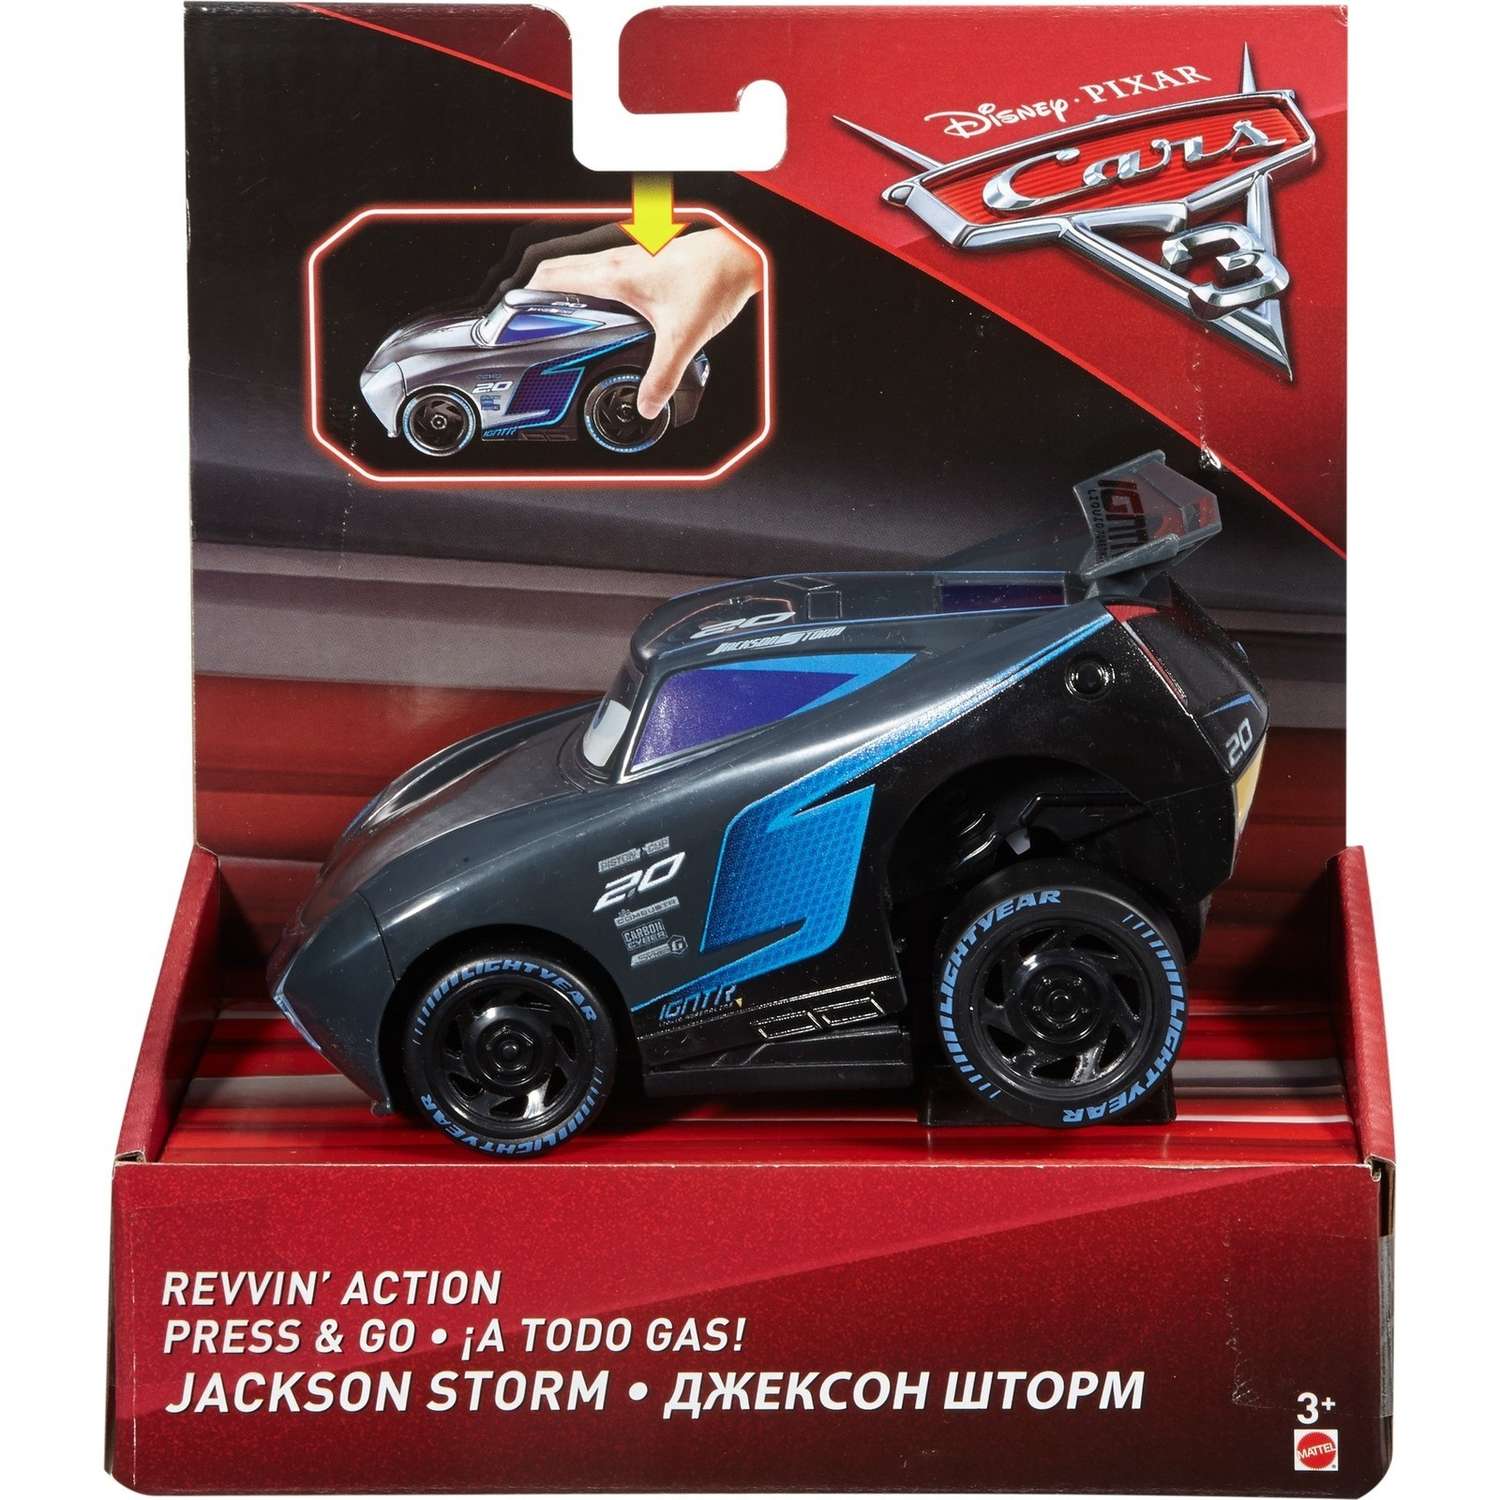 Машина Cars Тачки 3 с автоподзаводом Джексон Шторм DVD34 DVD31 - фото 2